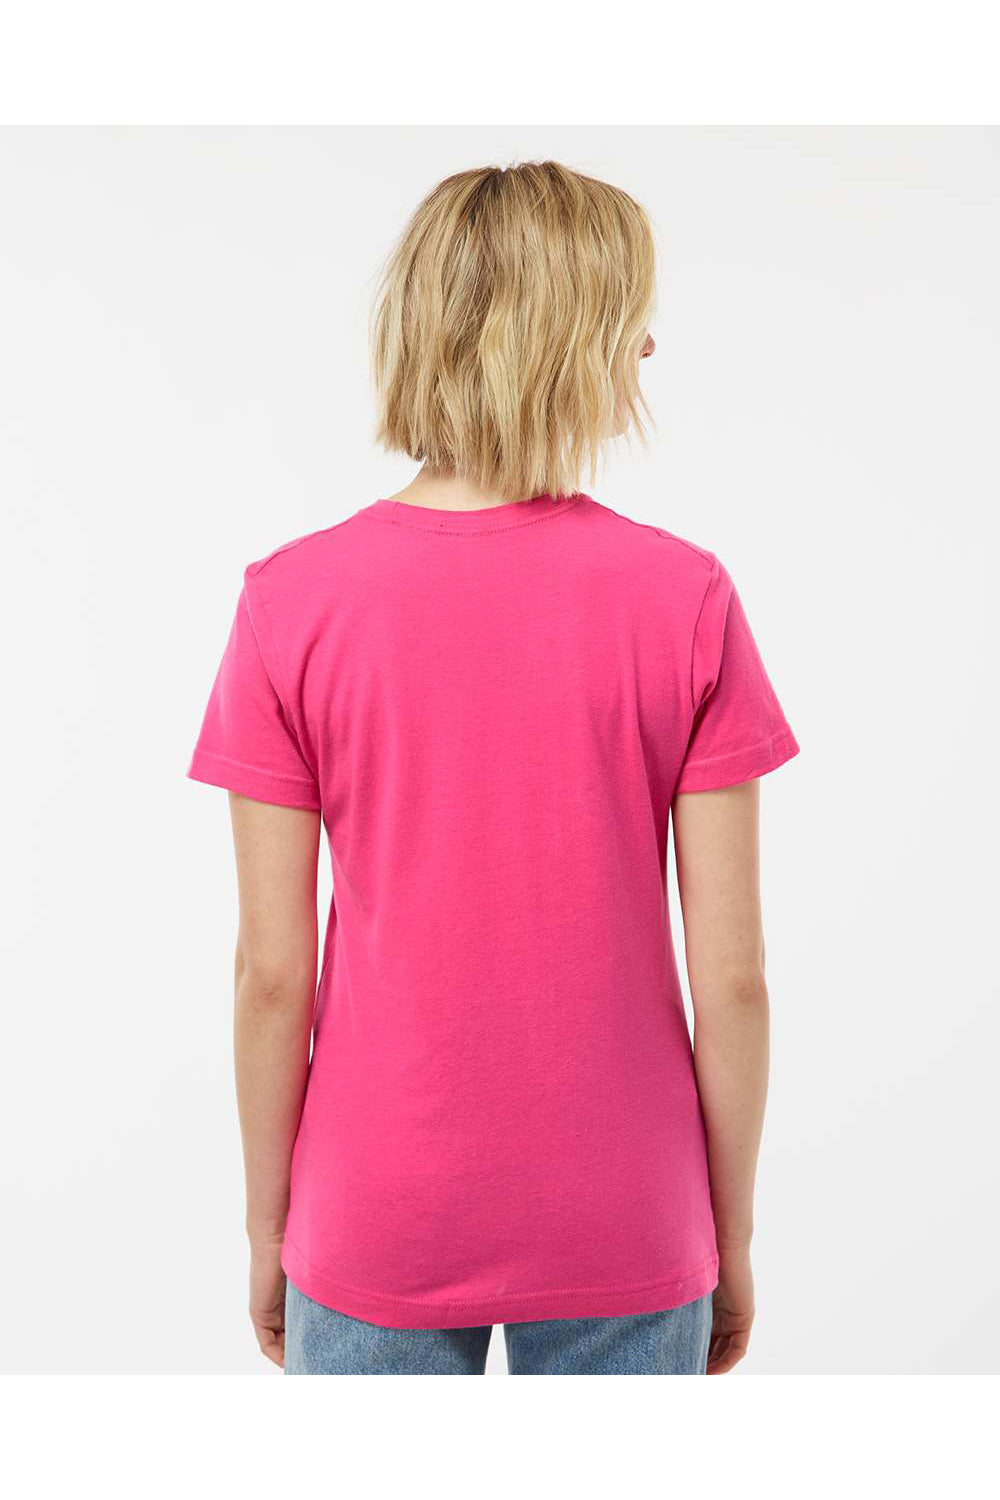 Tultex 216 Womens Fine Jersey Classic Fit Short Sleeve Crewneck T-Shirt Fuchsia Pink Model Back